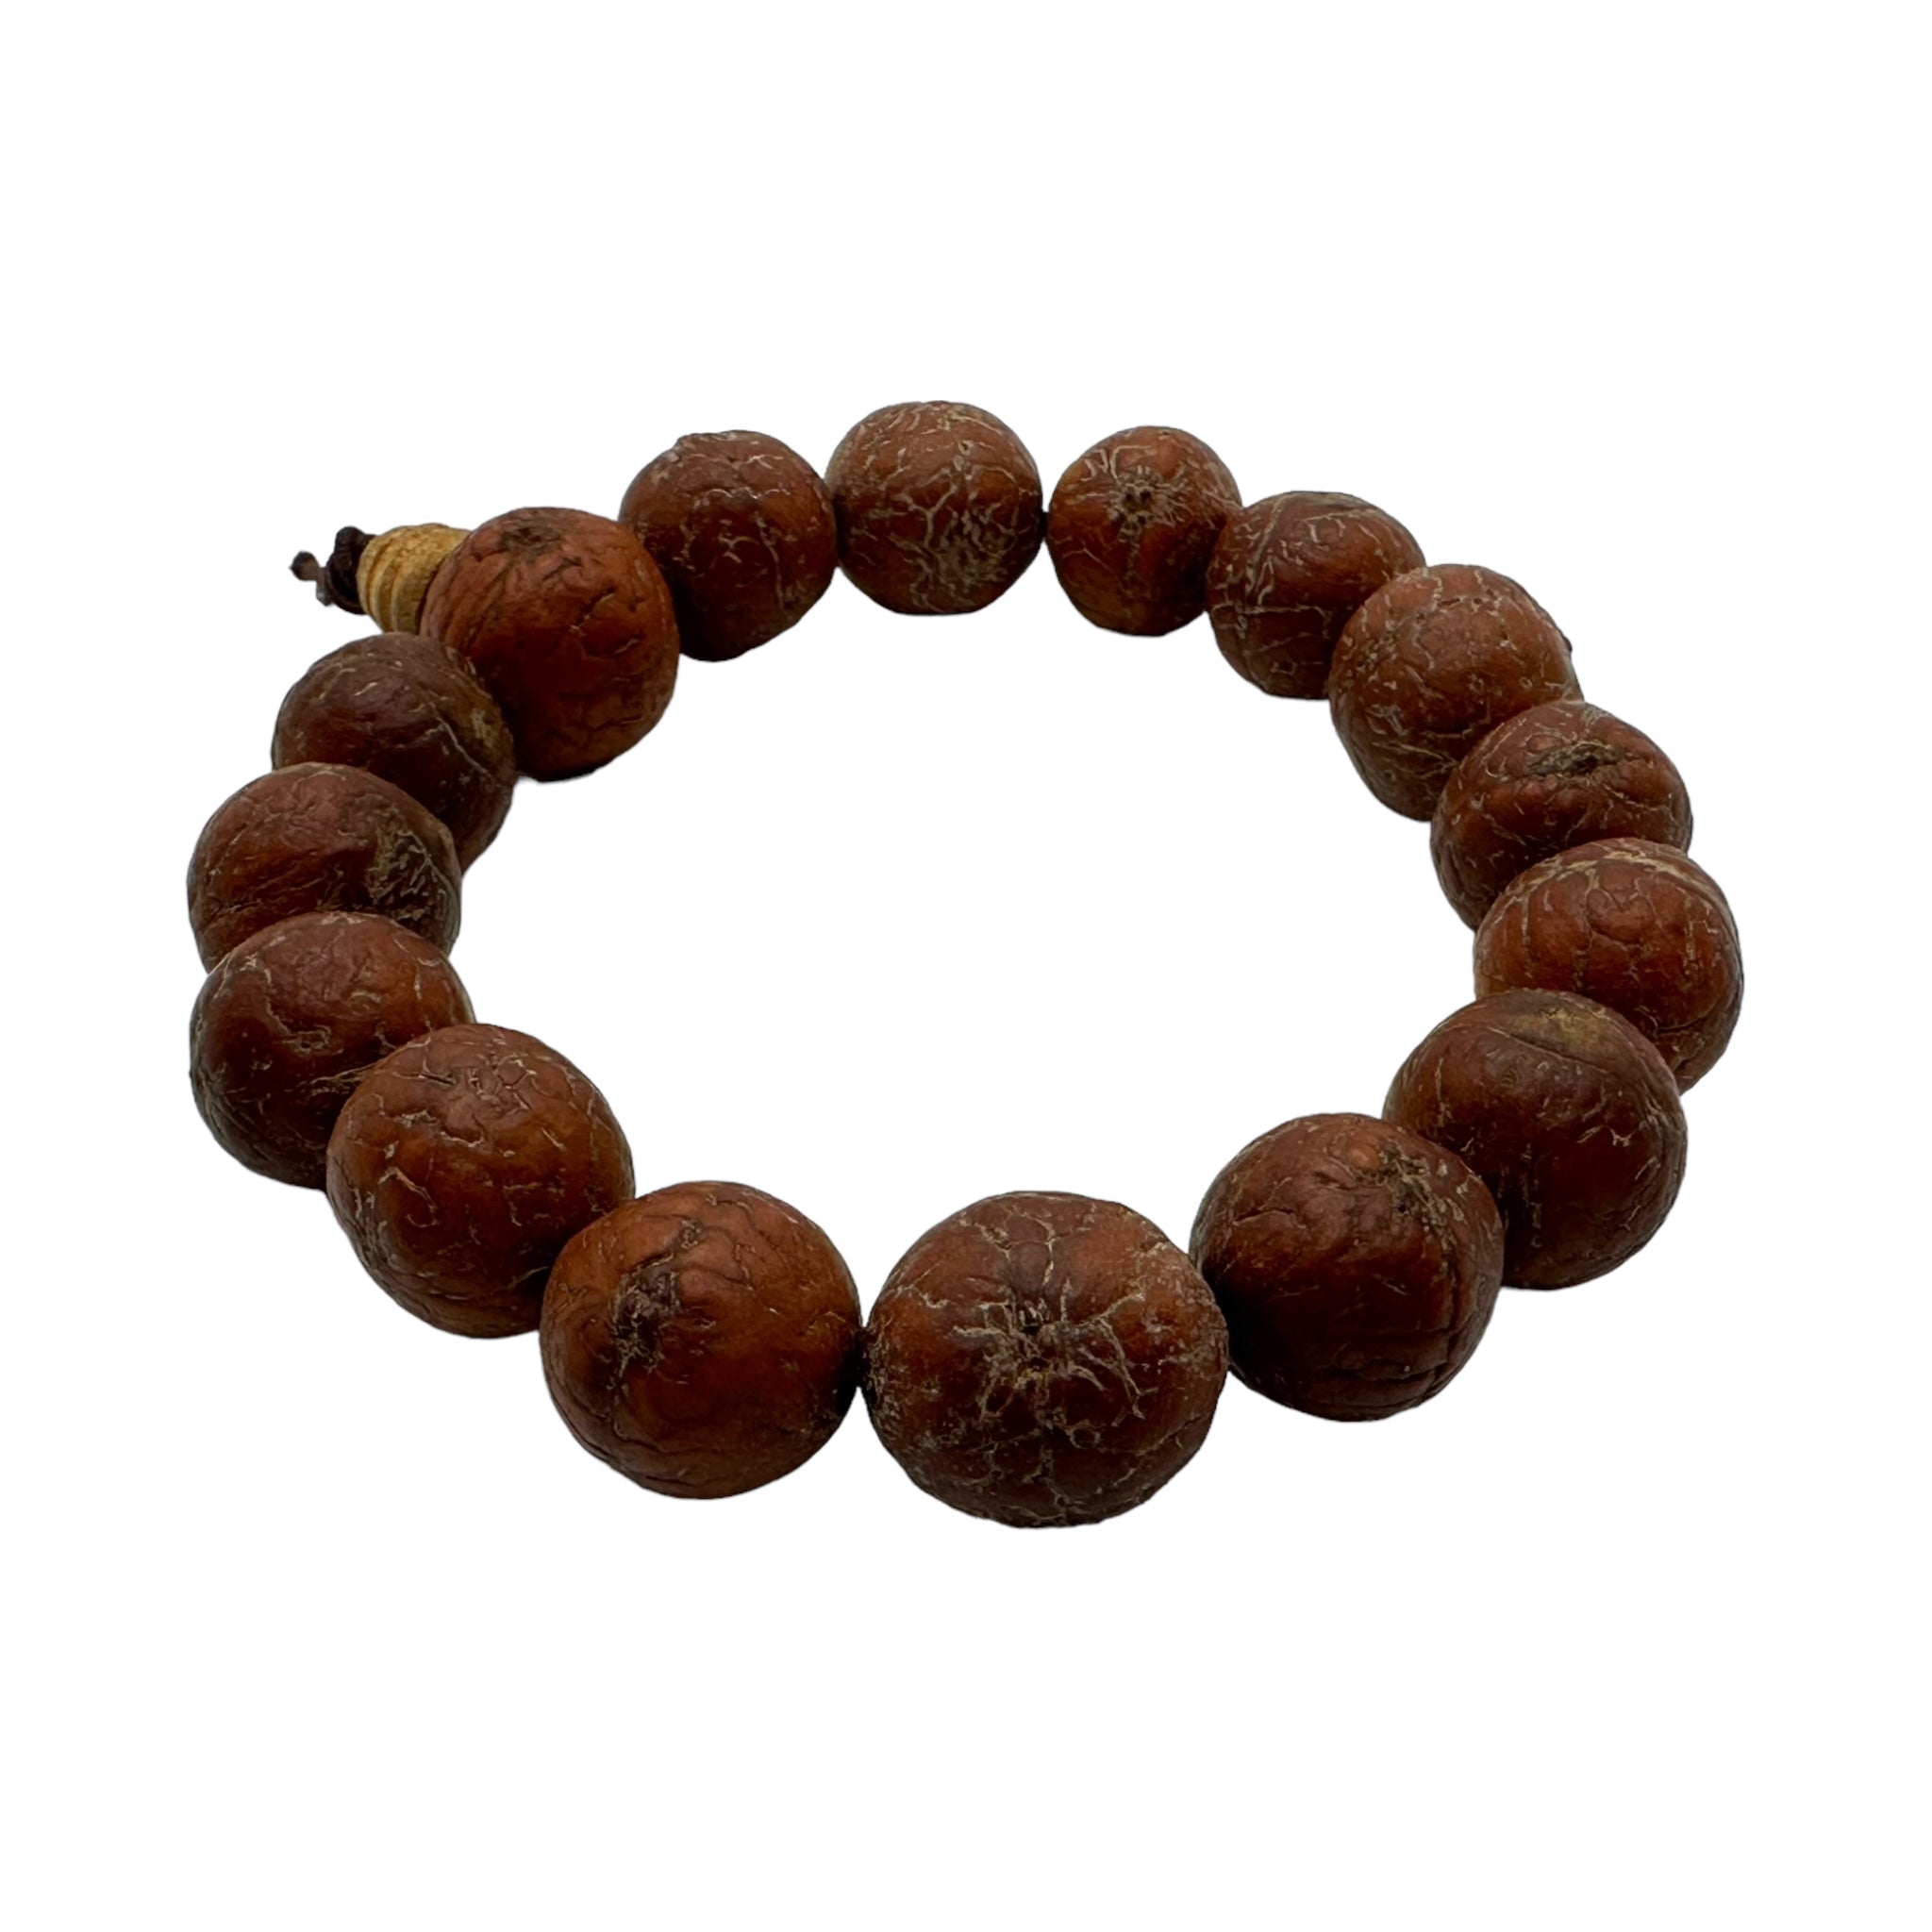 Bodhi seed bracelet